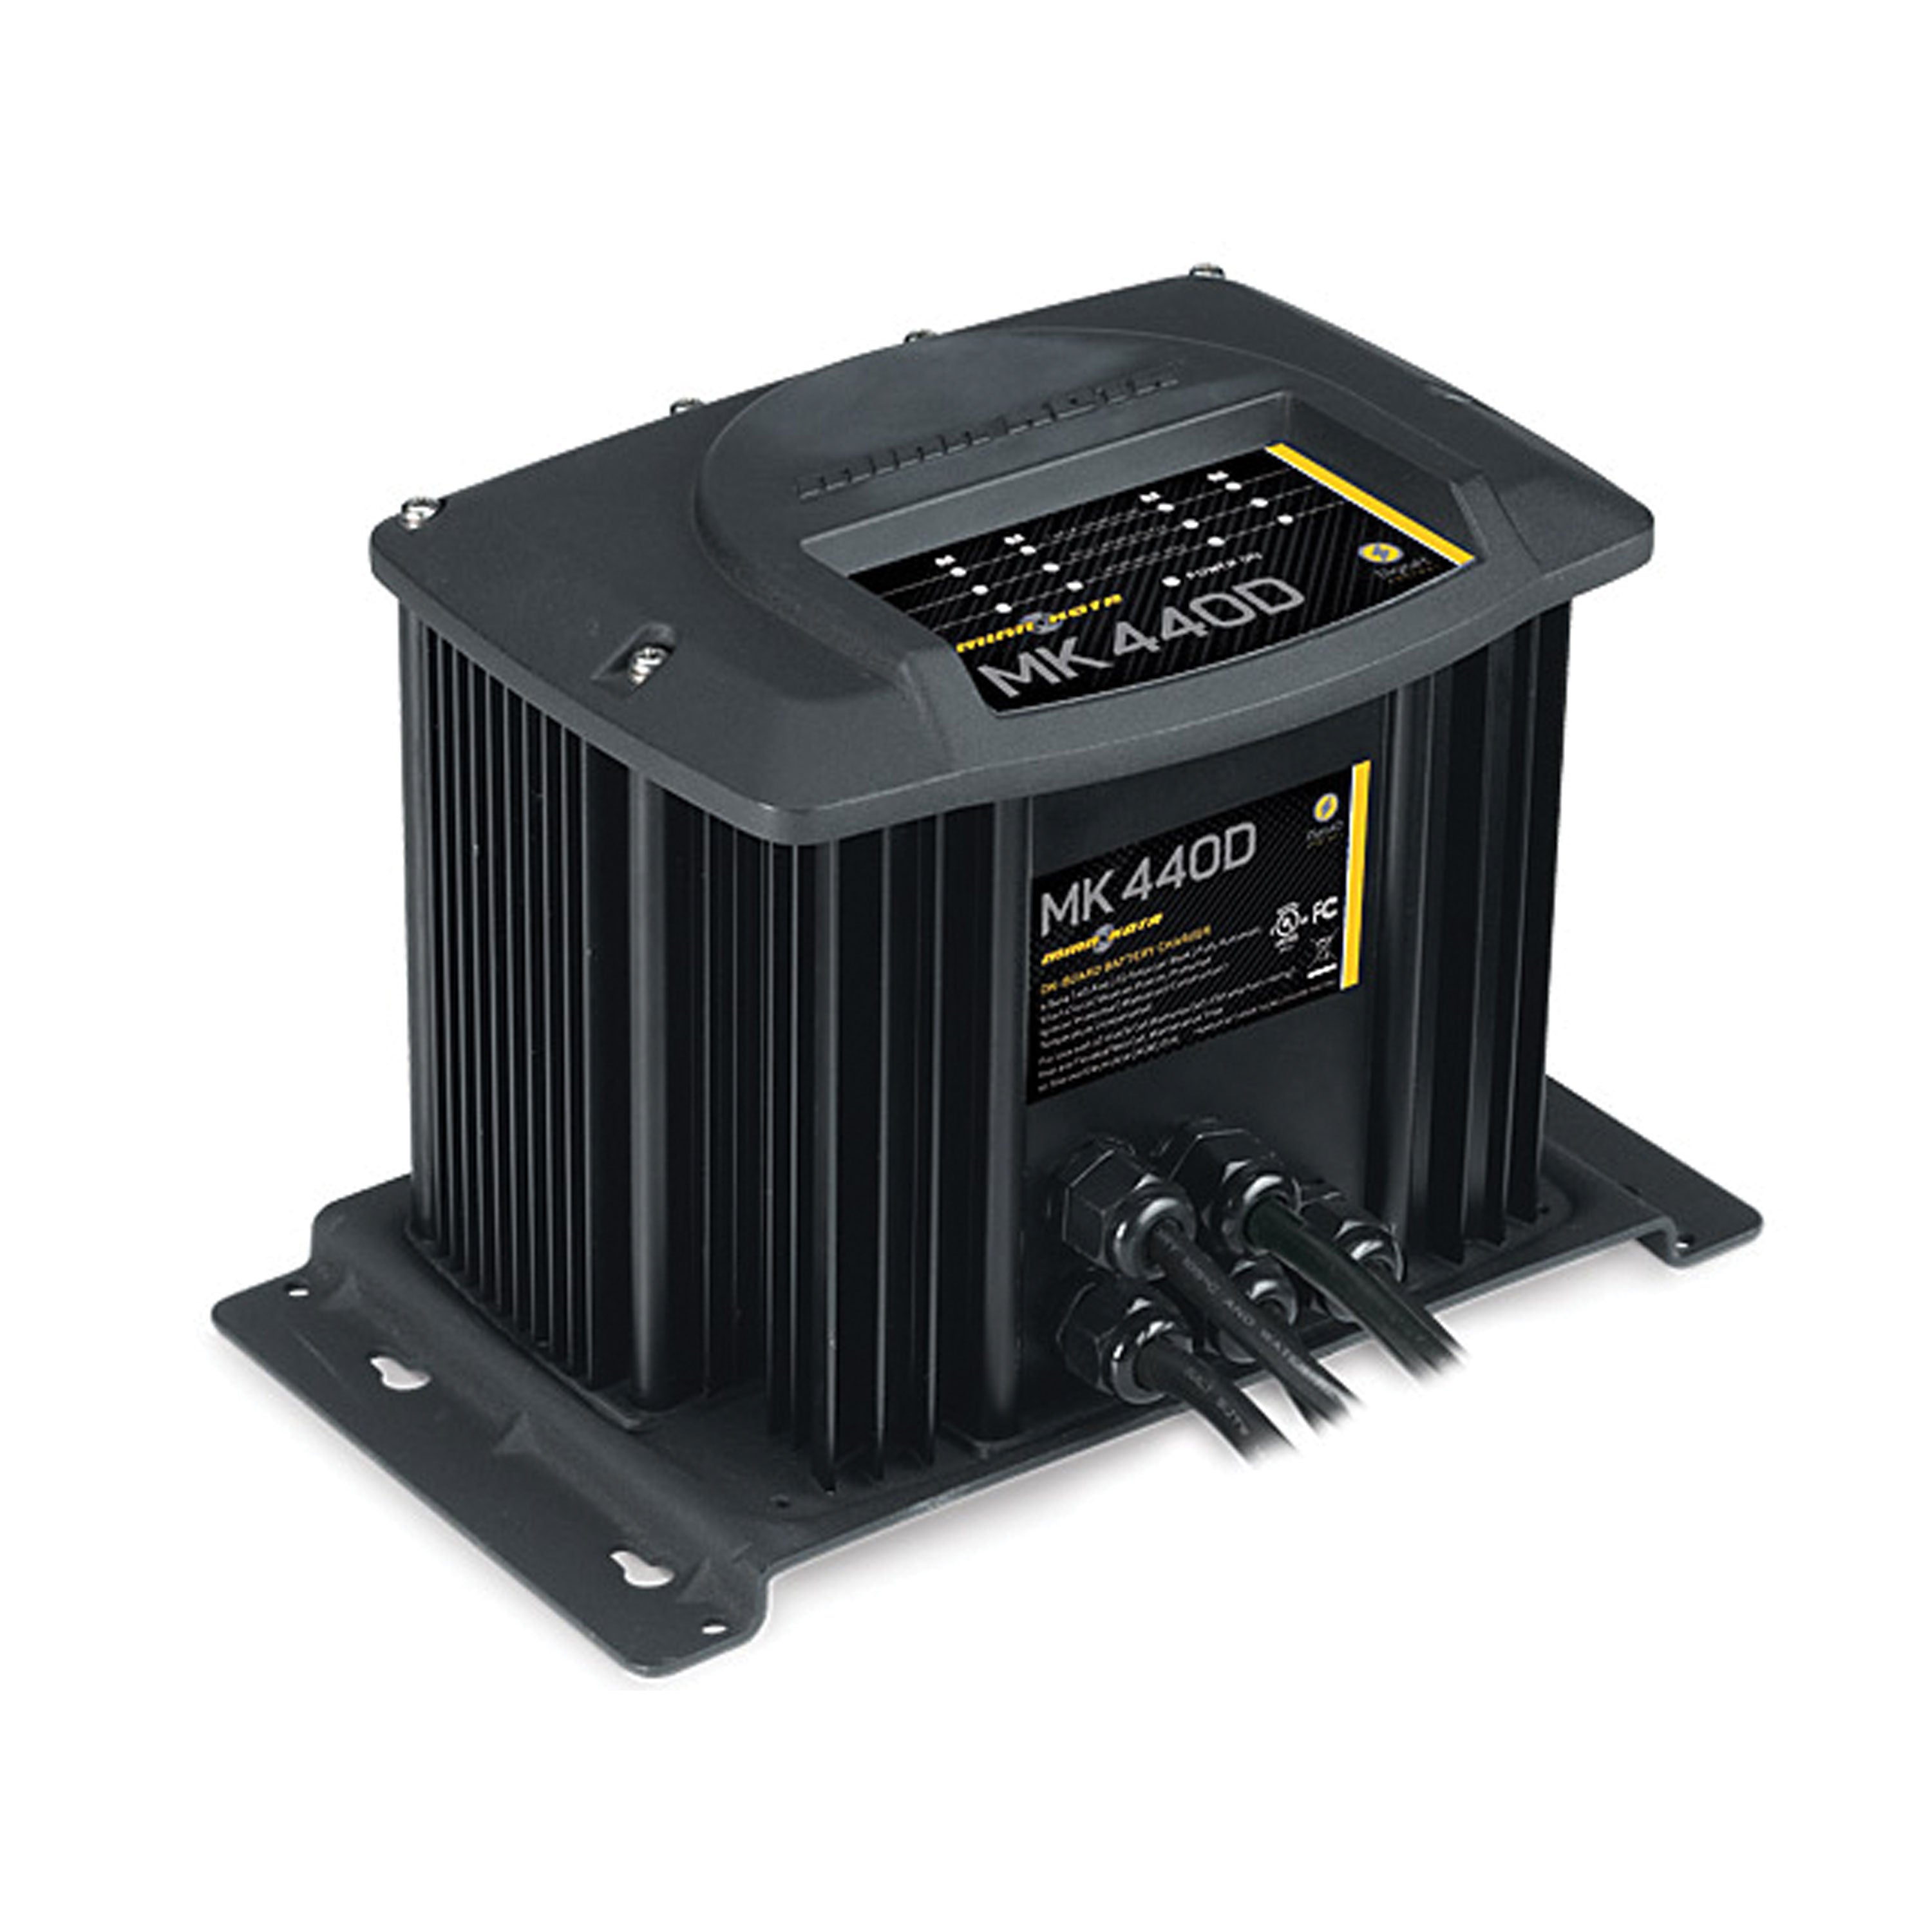 Minn Kota 1824405 Digital On-Board Marine Battery Charger - 4 Bank / 10 Amps